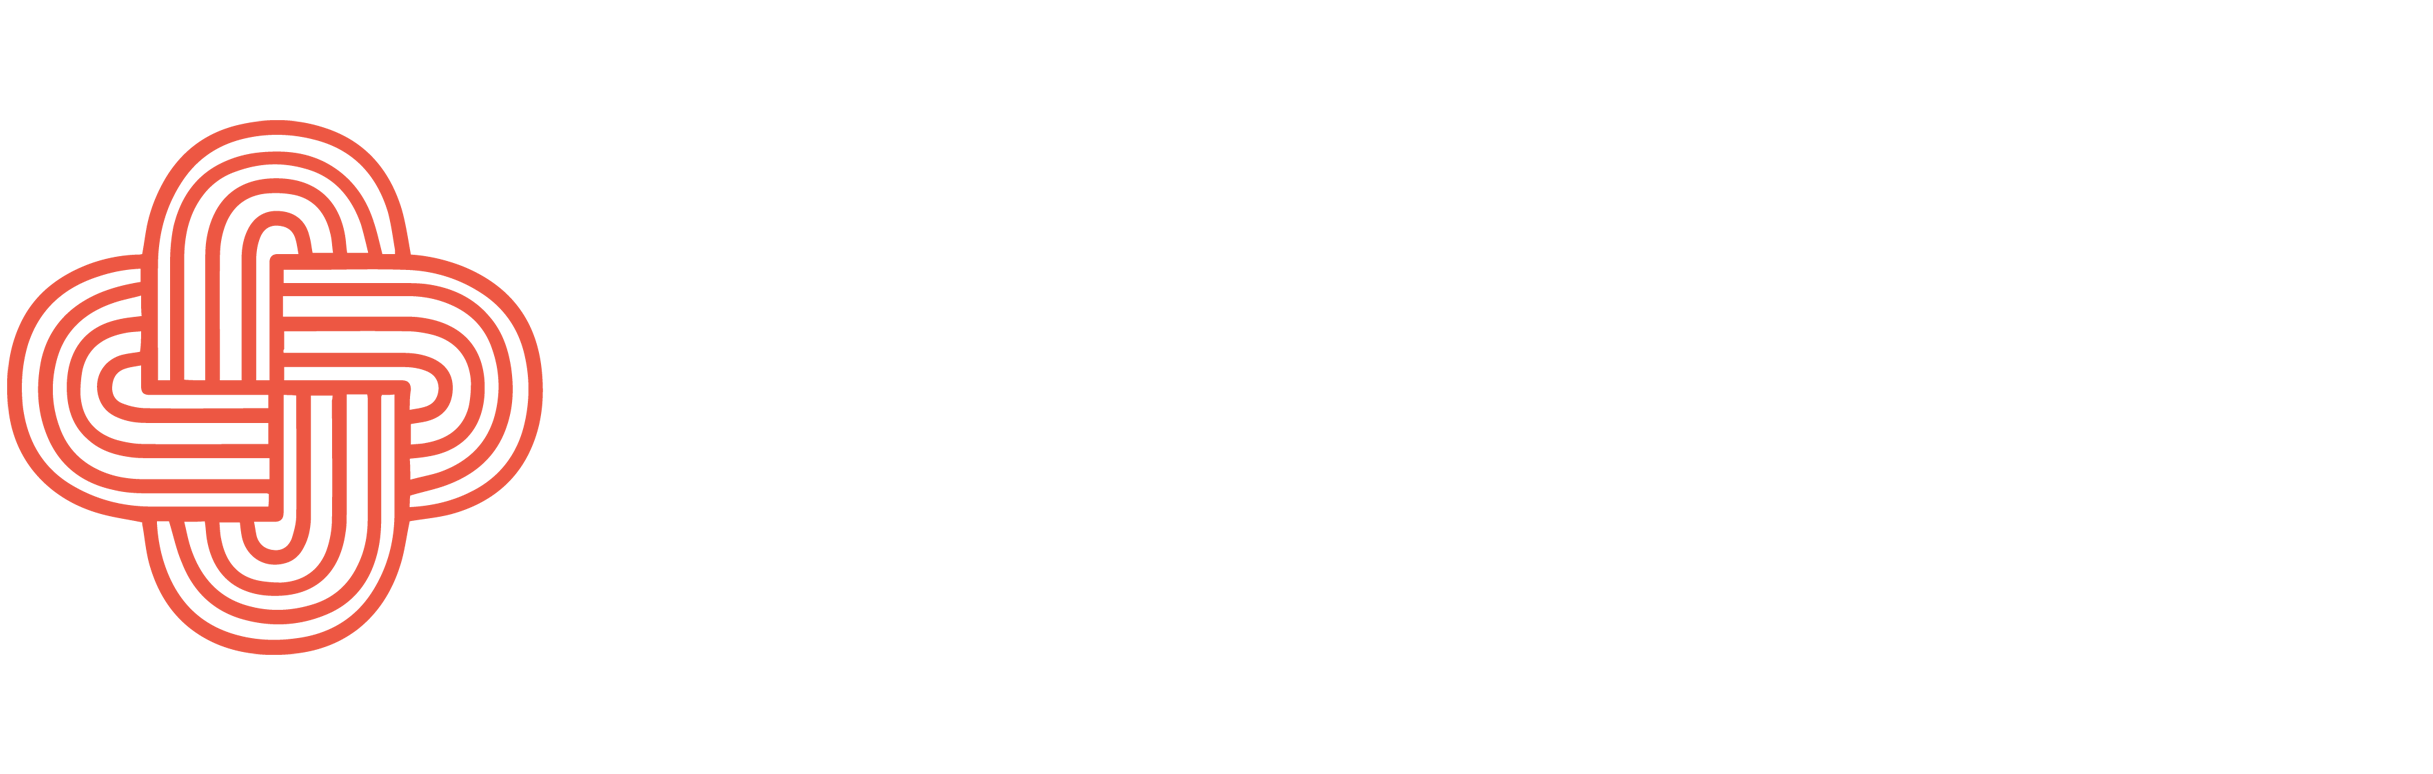 Bonema GmbH logo